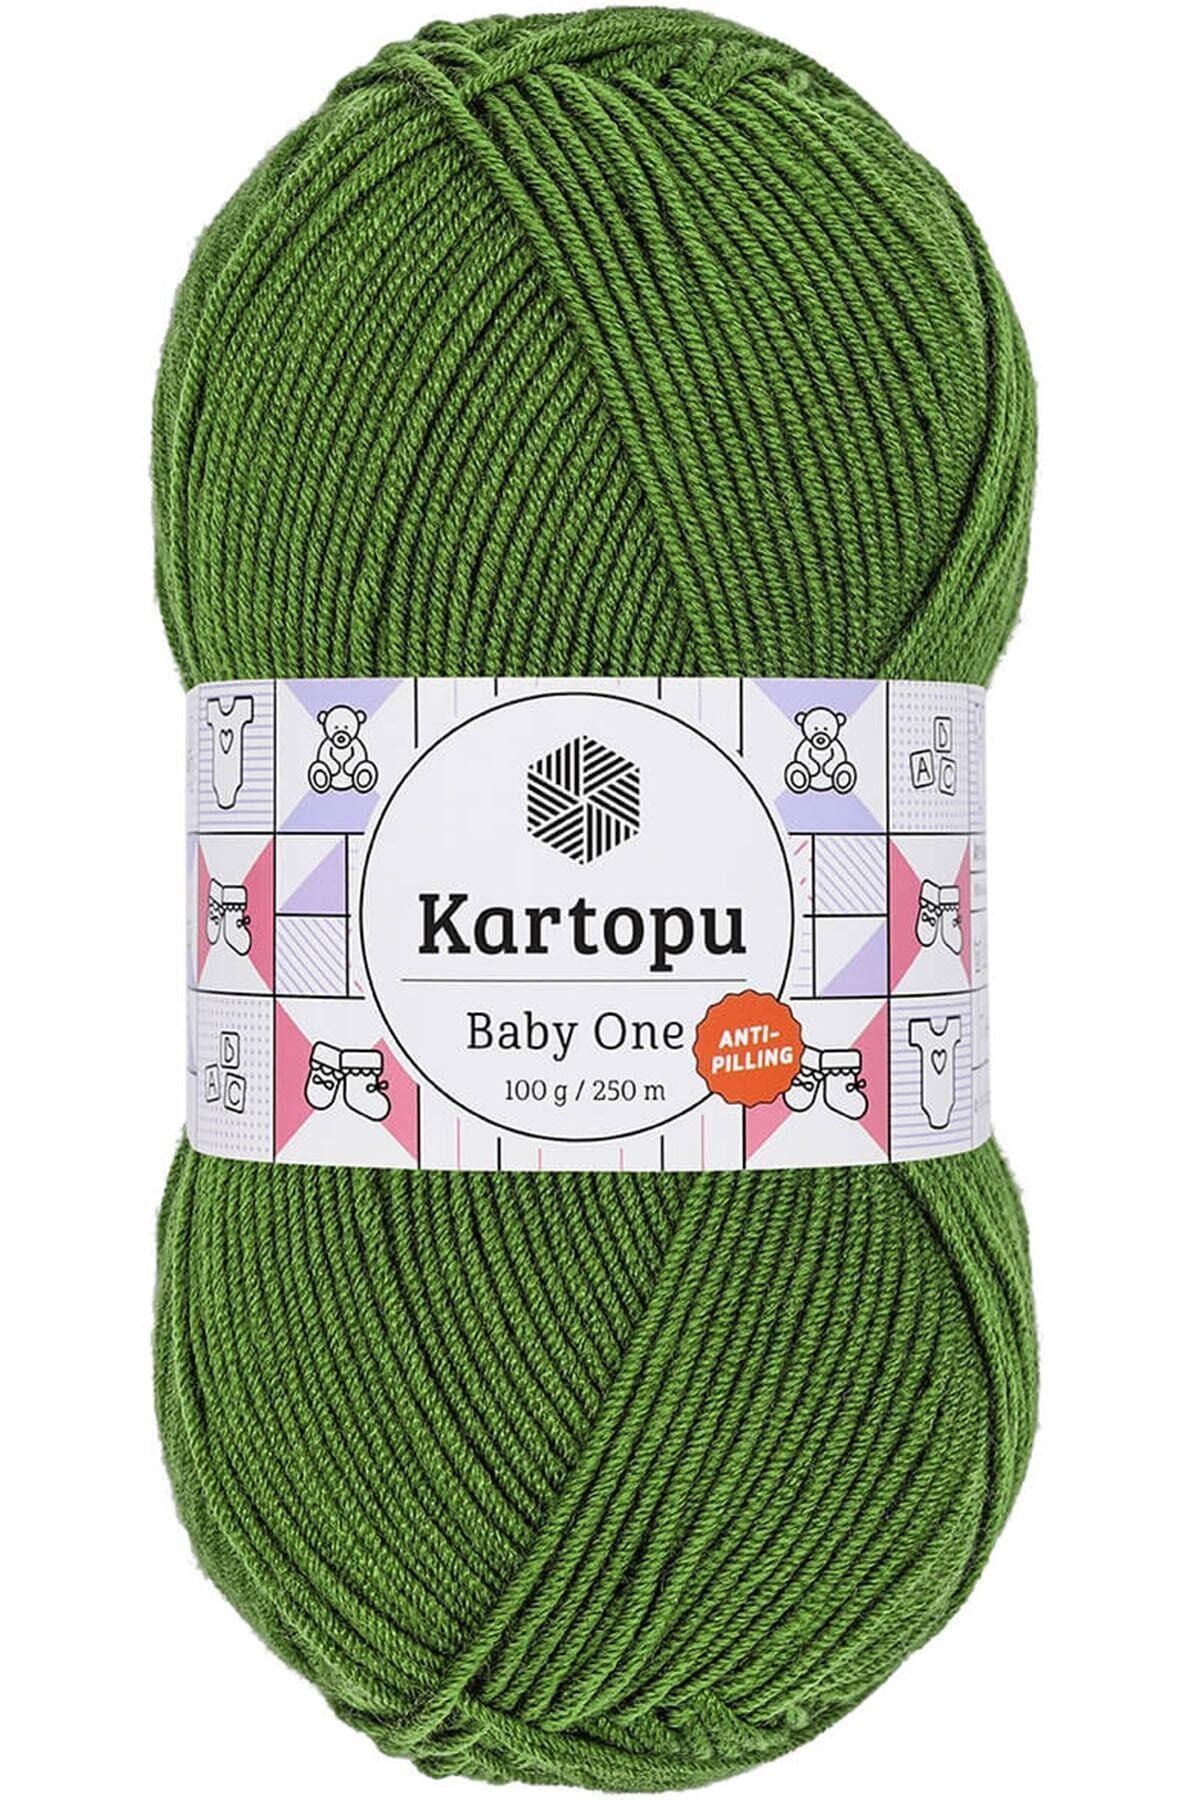 Kartopu Baby One Tüylenmeyen Bebek Yünü Yeşil K1391